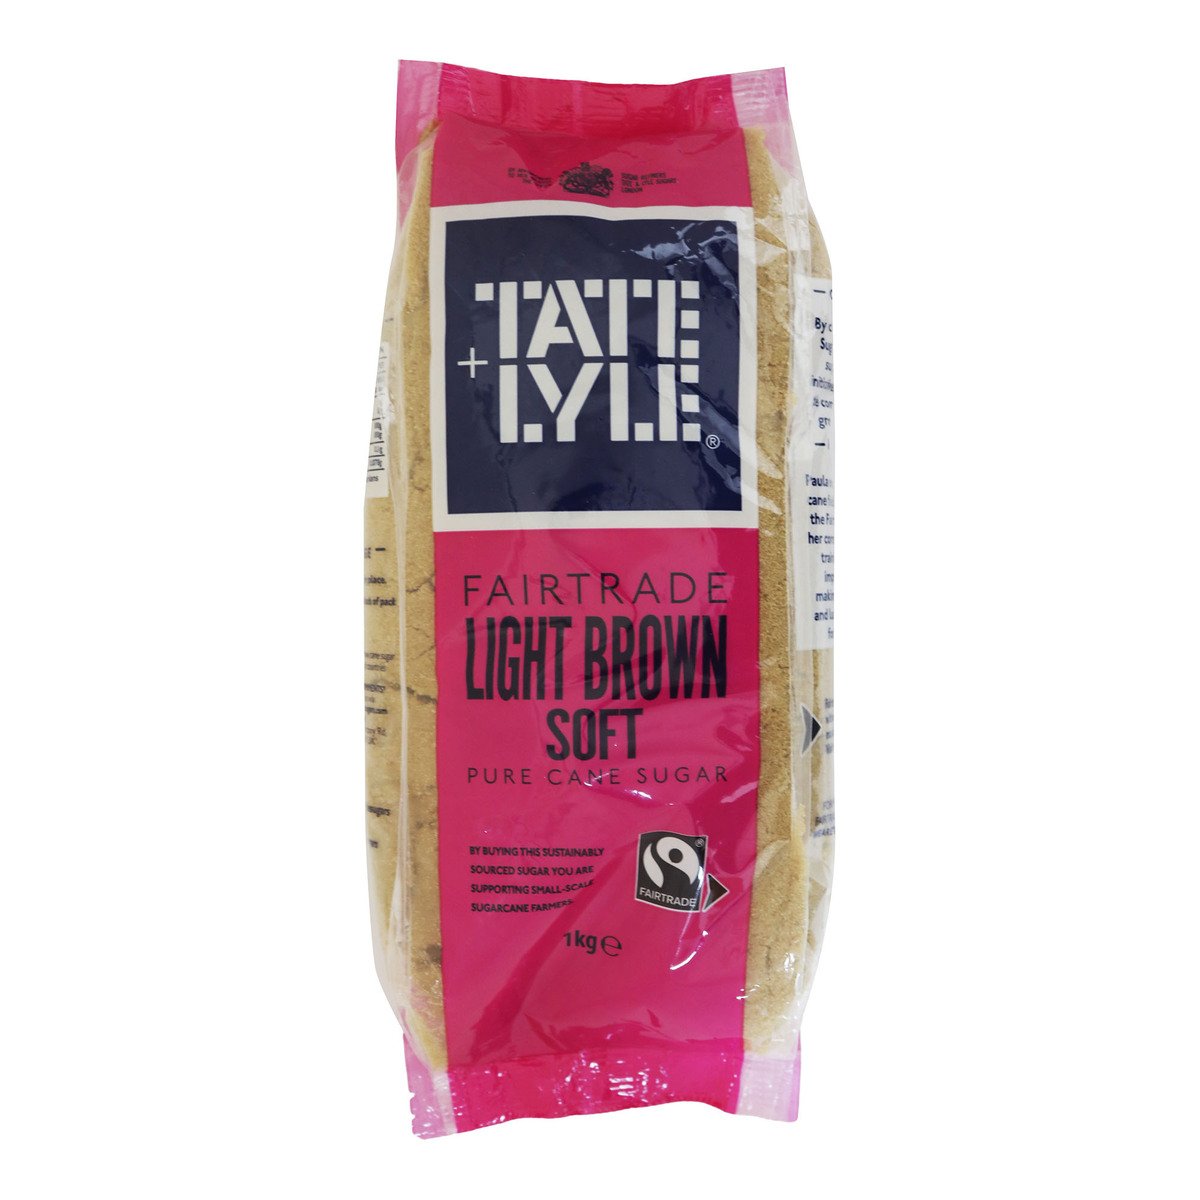 Tate Lyle Light Brown Soft Sugar 1kg